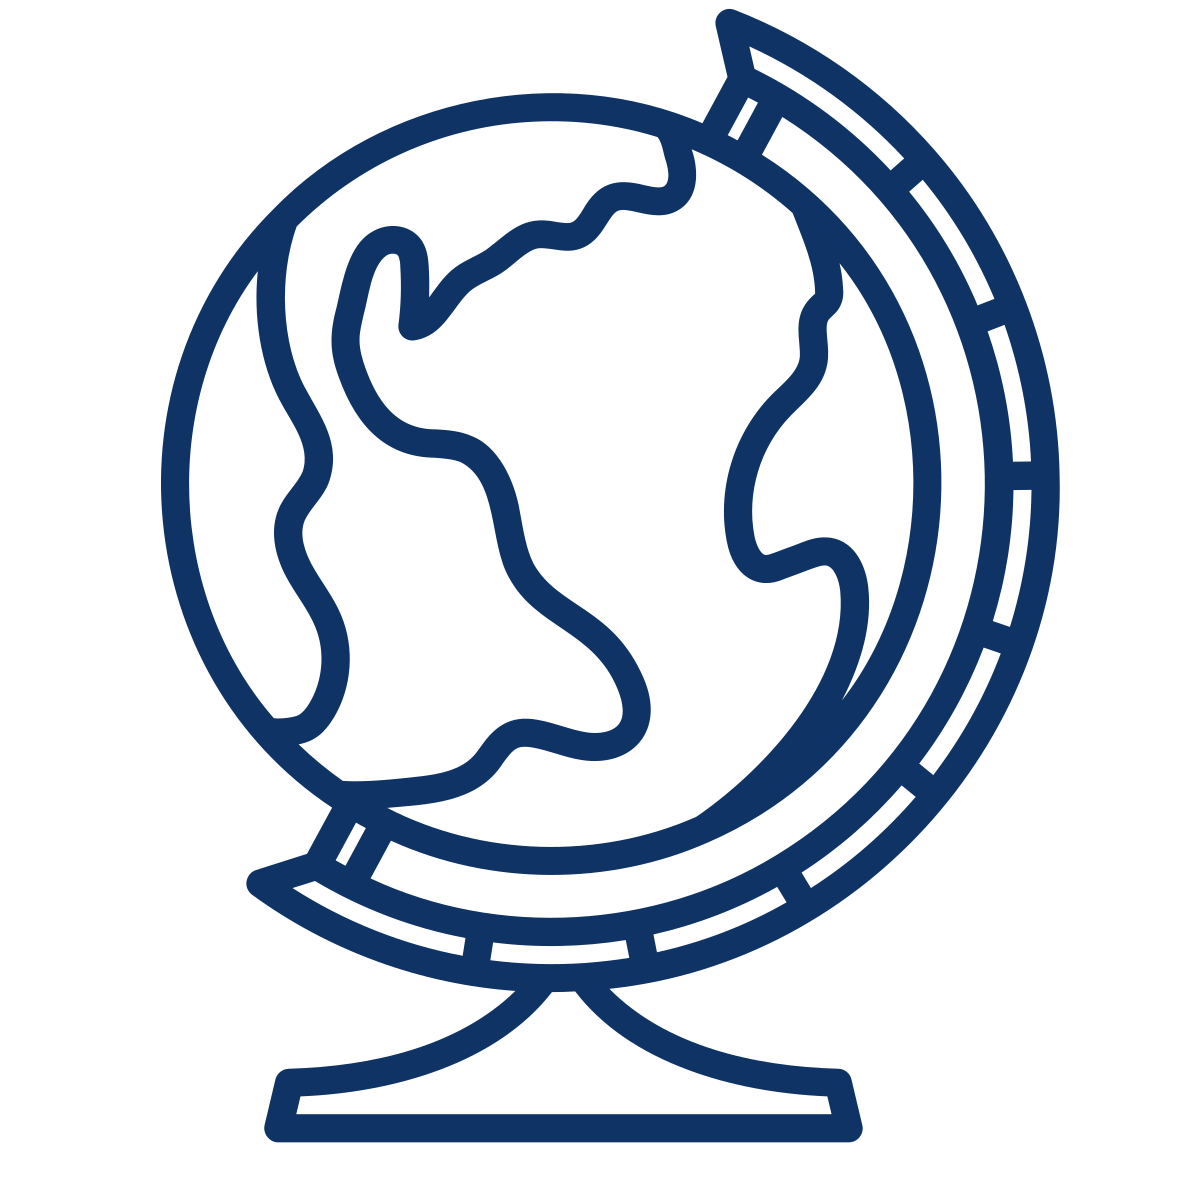 Graphic icon of a globe